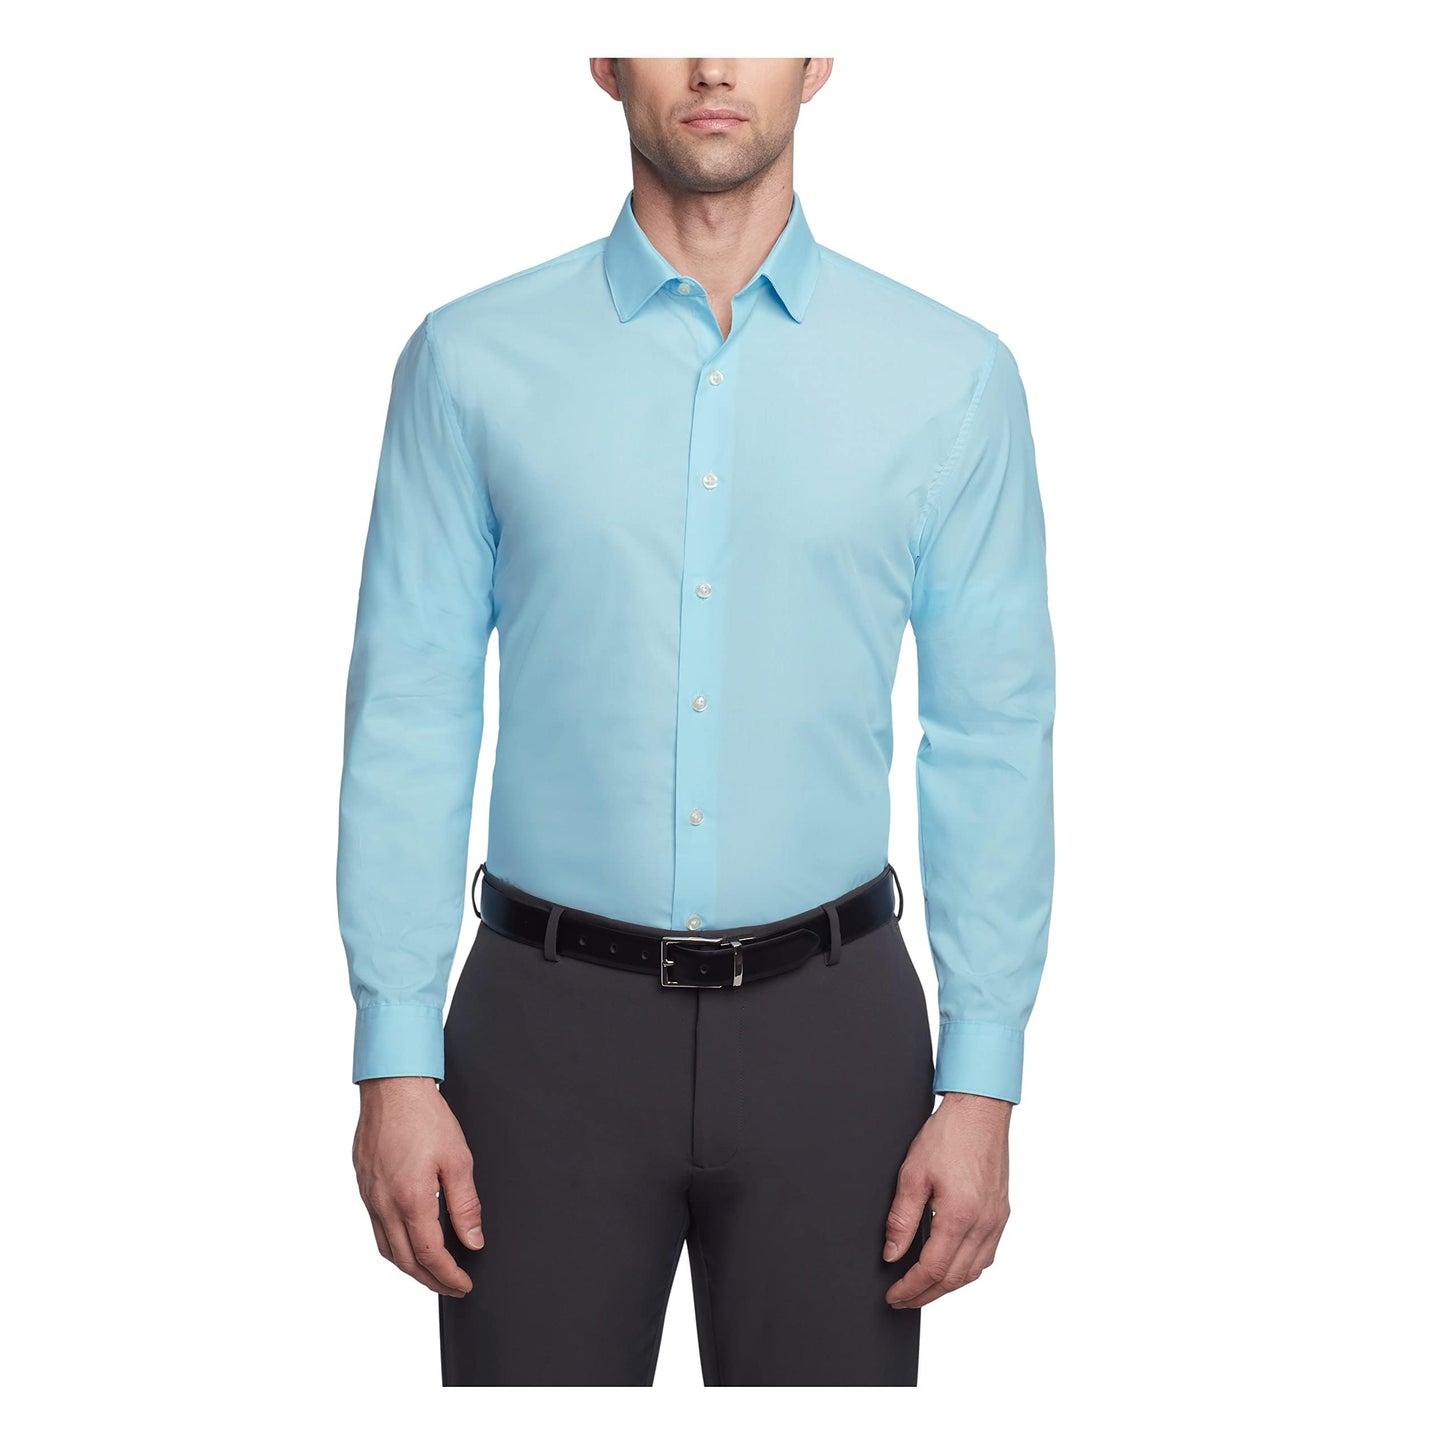 UNLISTED Men's Dress Shirt Slim Fit Solid